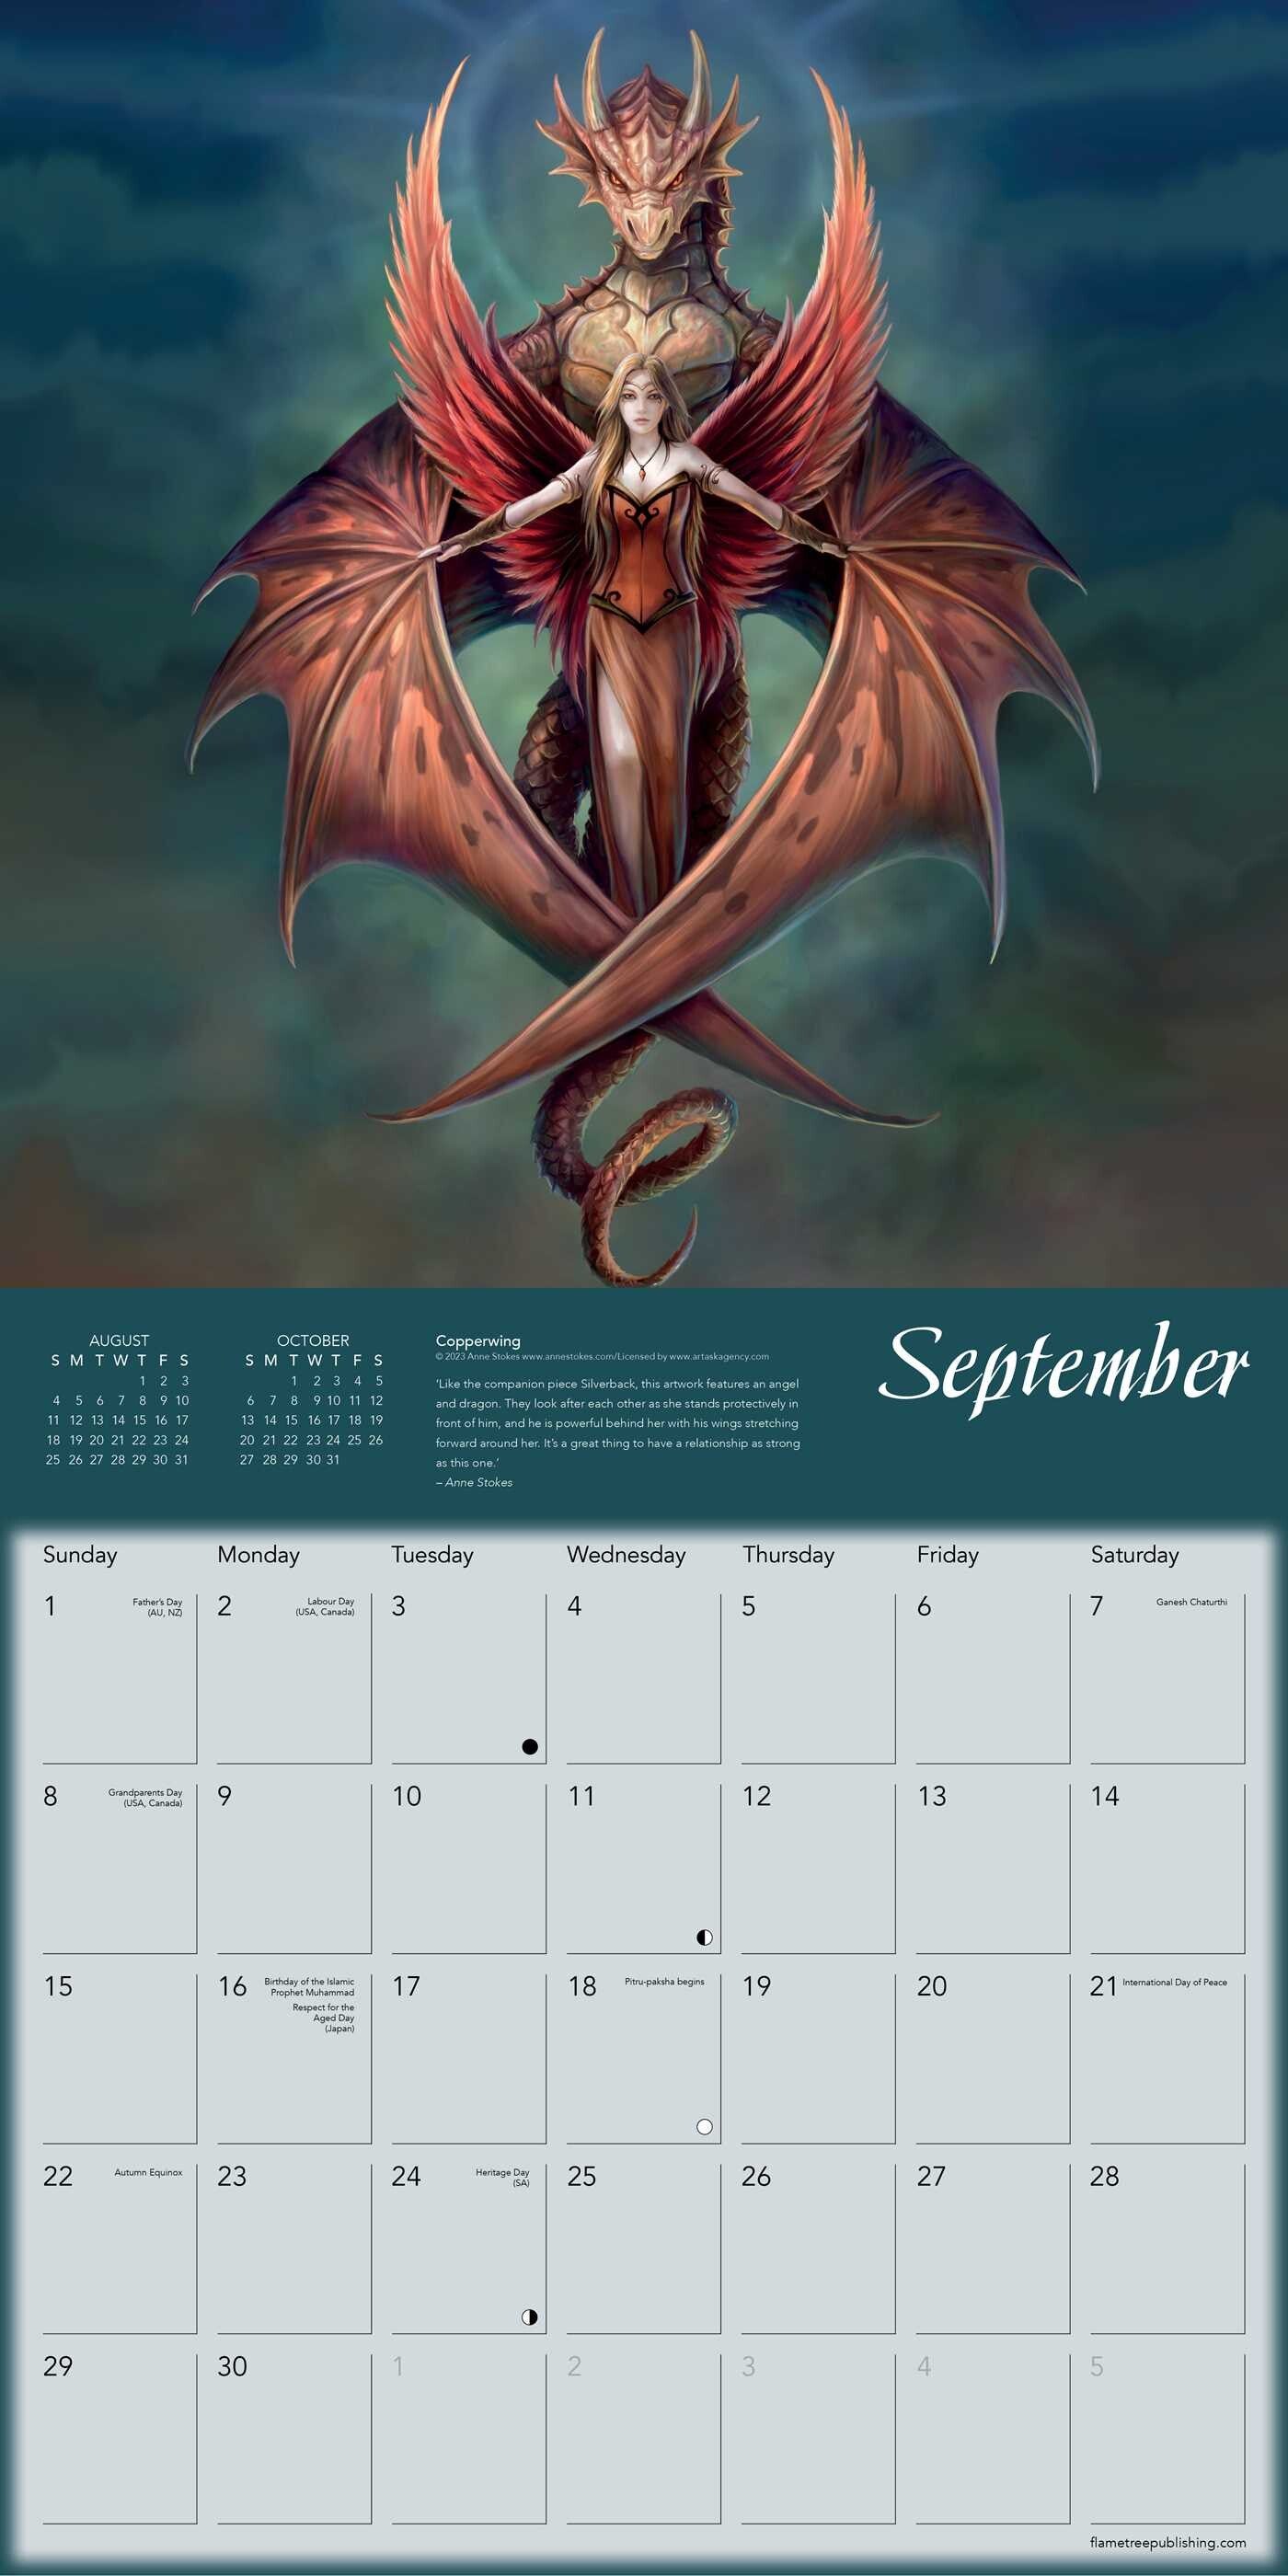 Dragons by Anne Stokes Wall Calendar 2024 (Art Calendar)